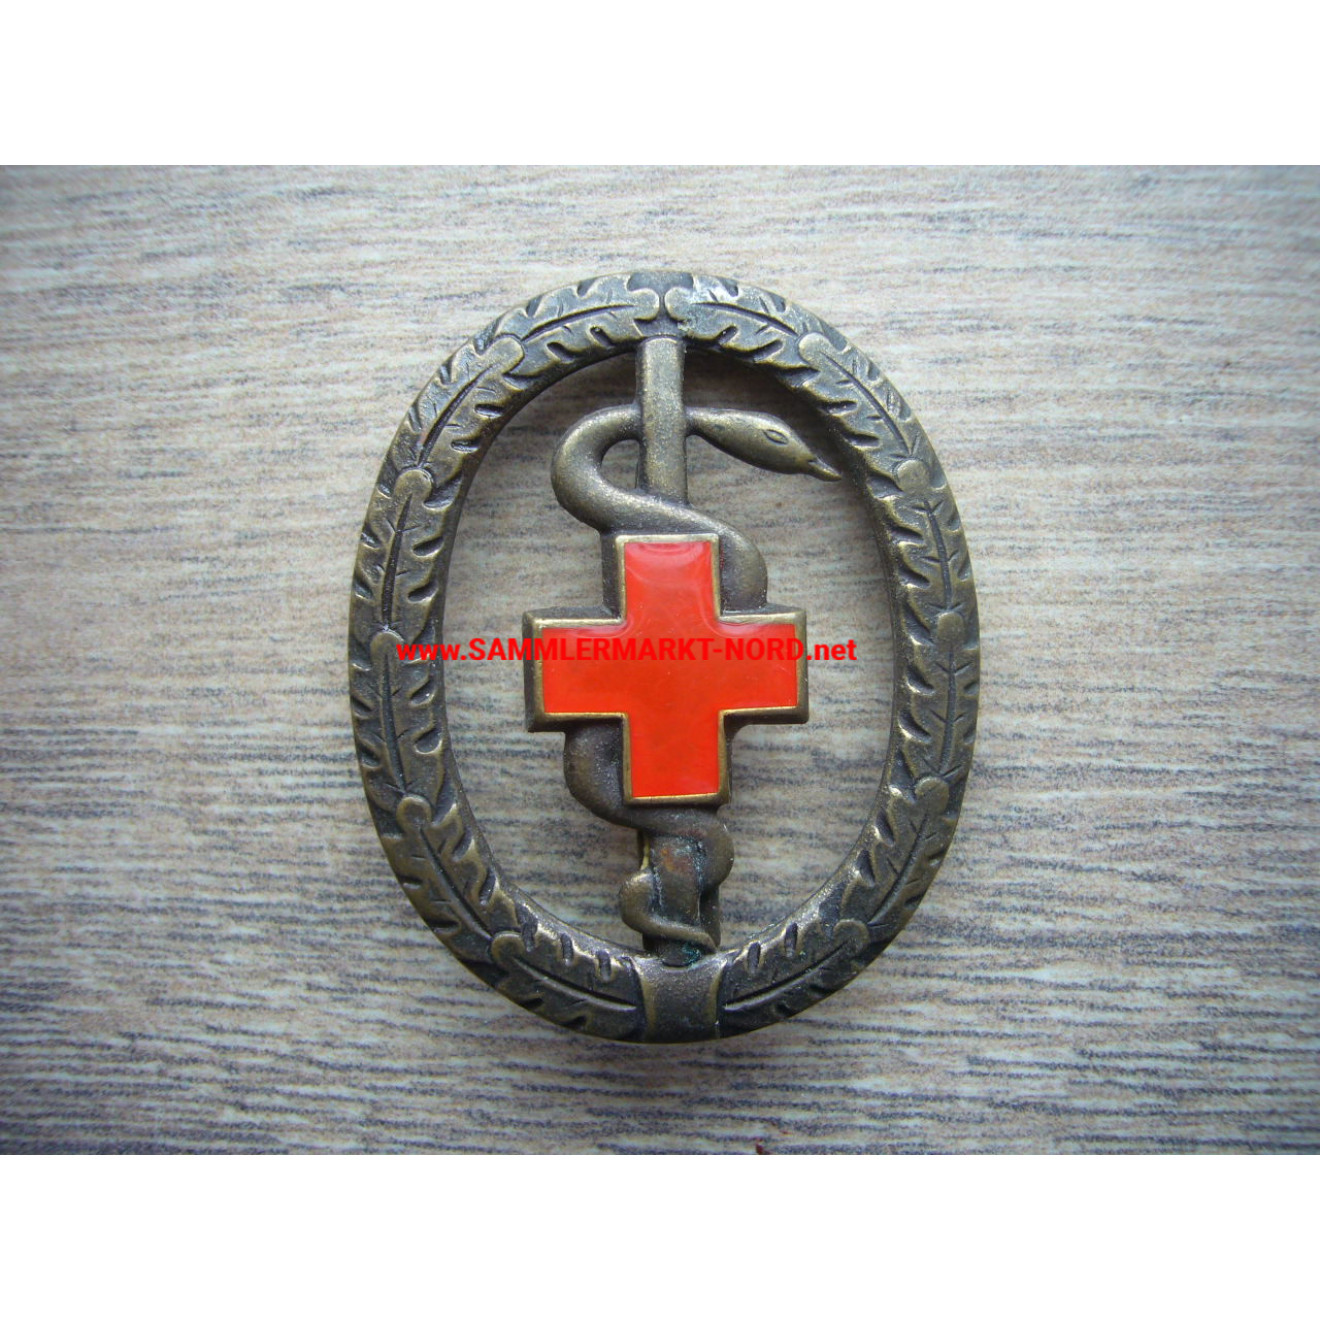 Bavarian Red Cross - Bronze performance badge